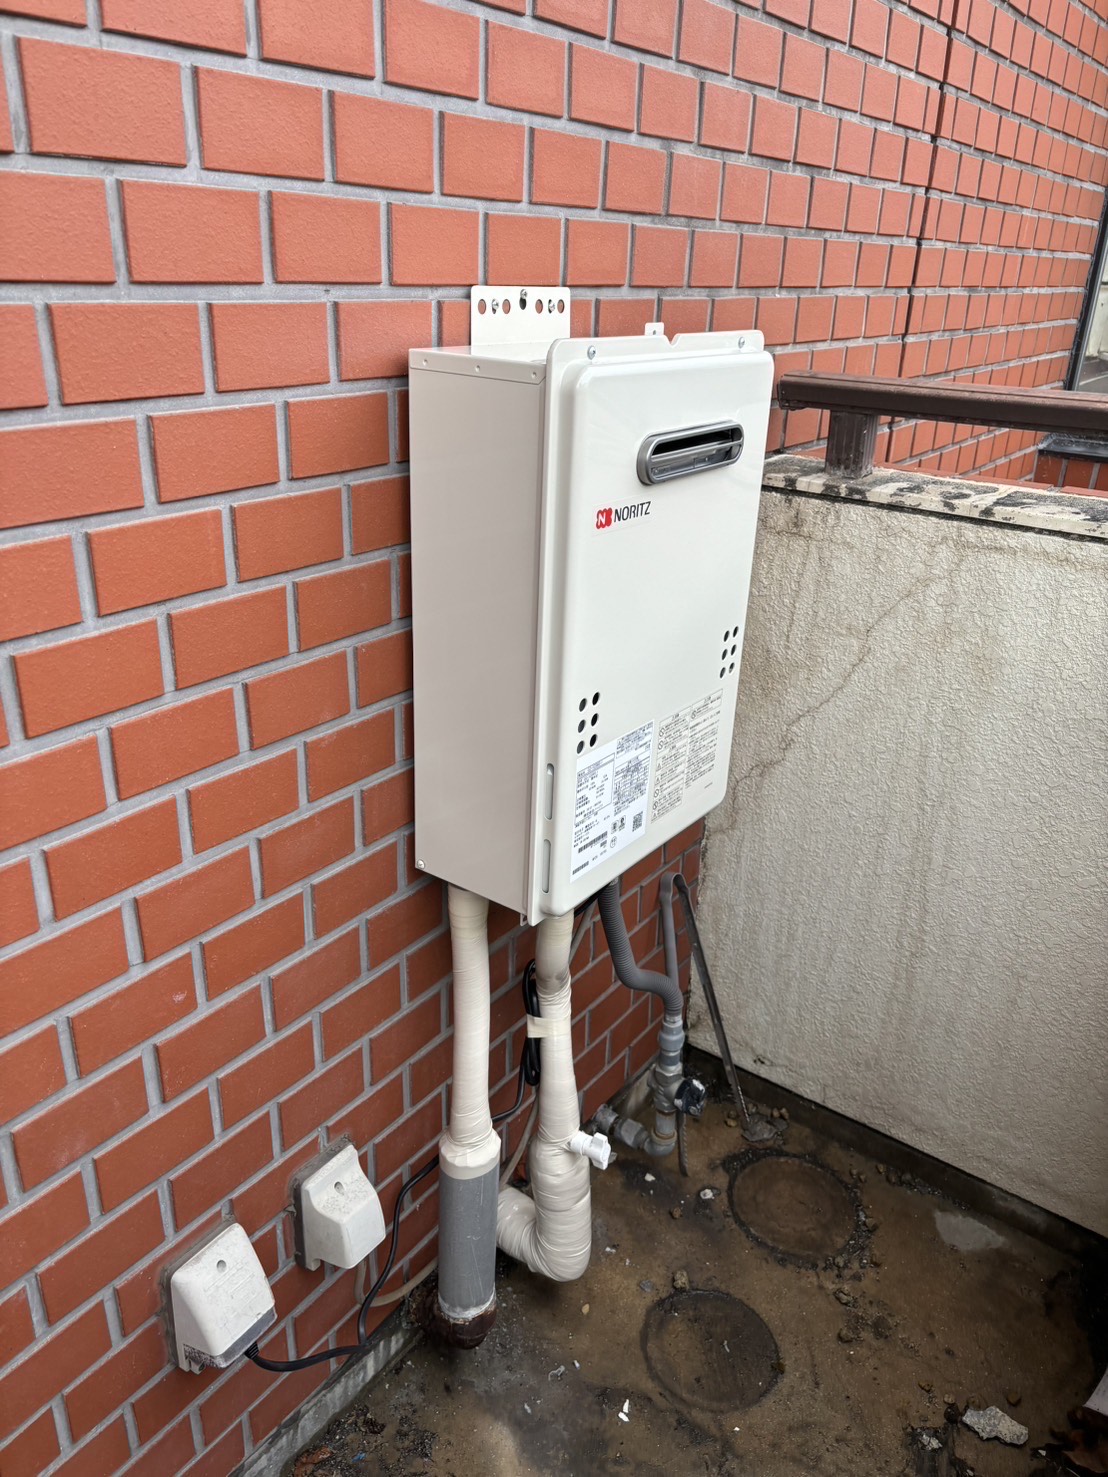 兵庫県明石市Fガス給湯器の施工事例工事後写真